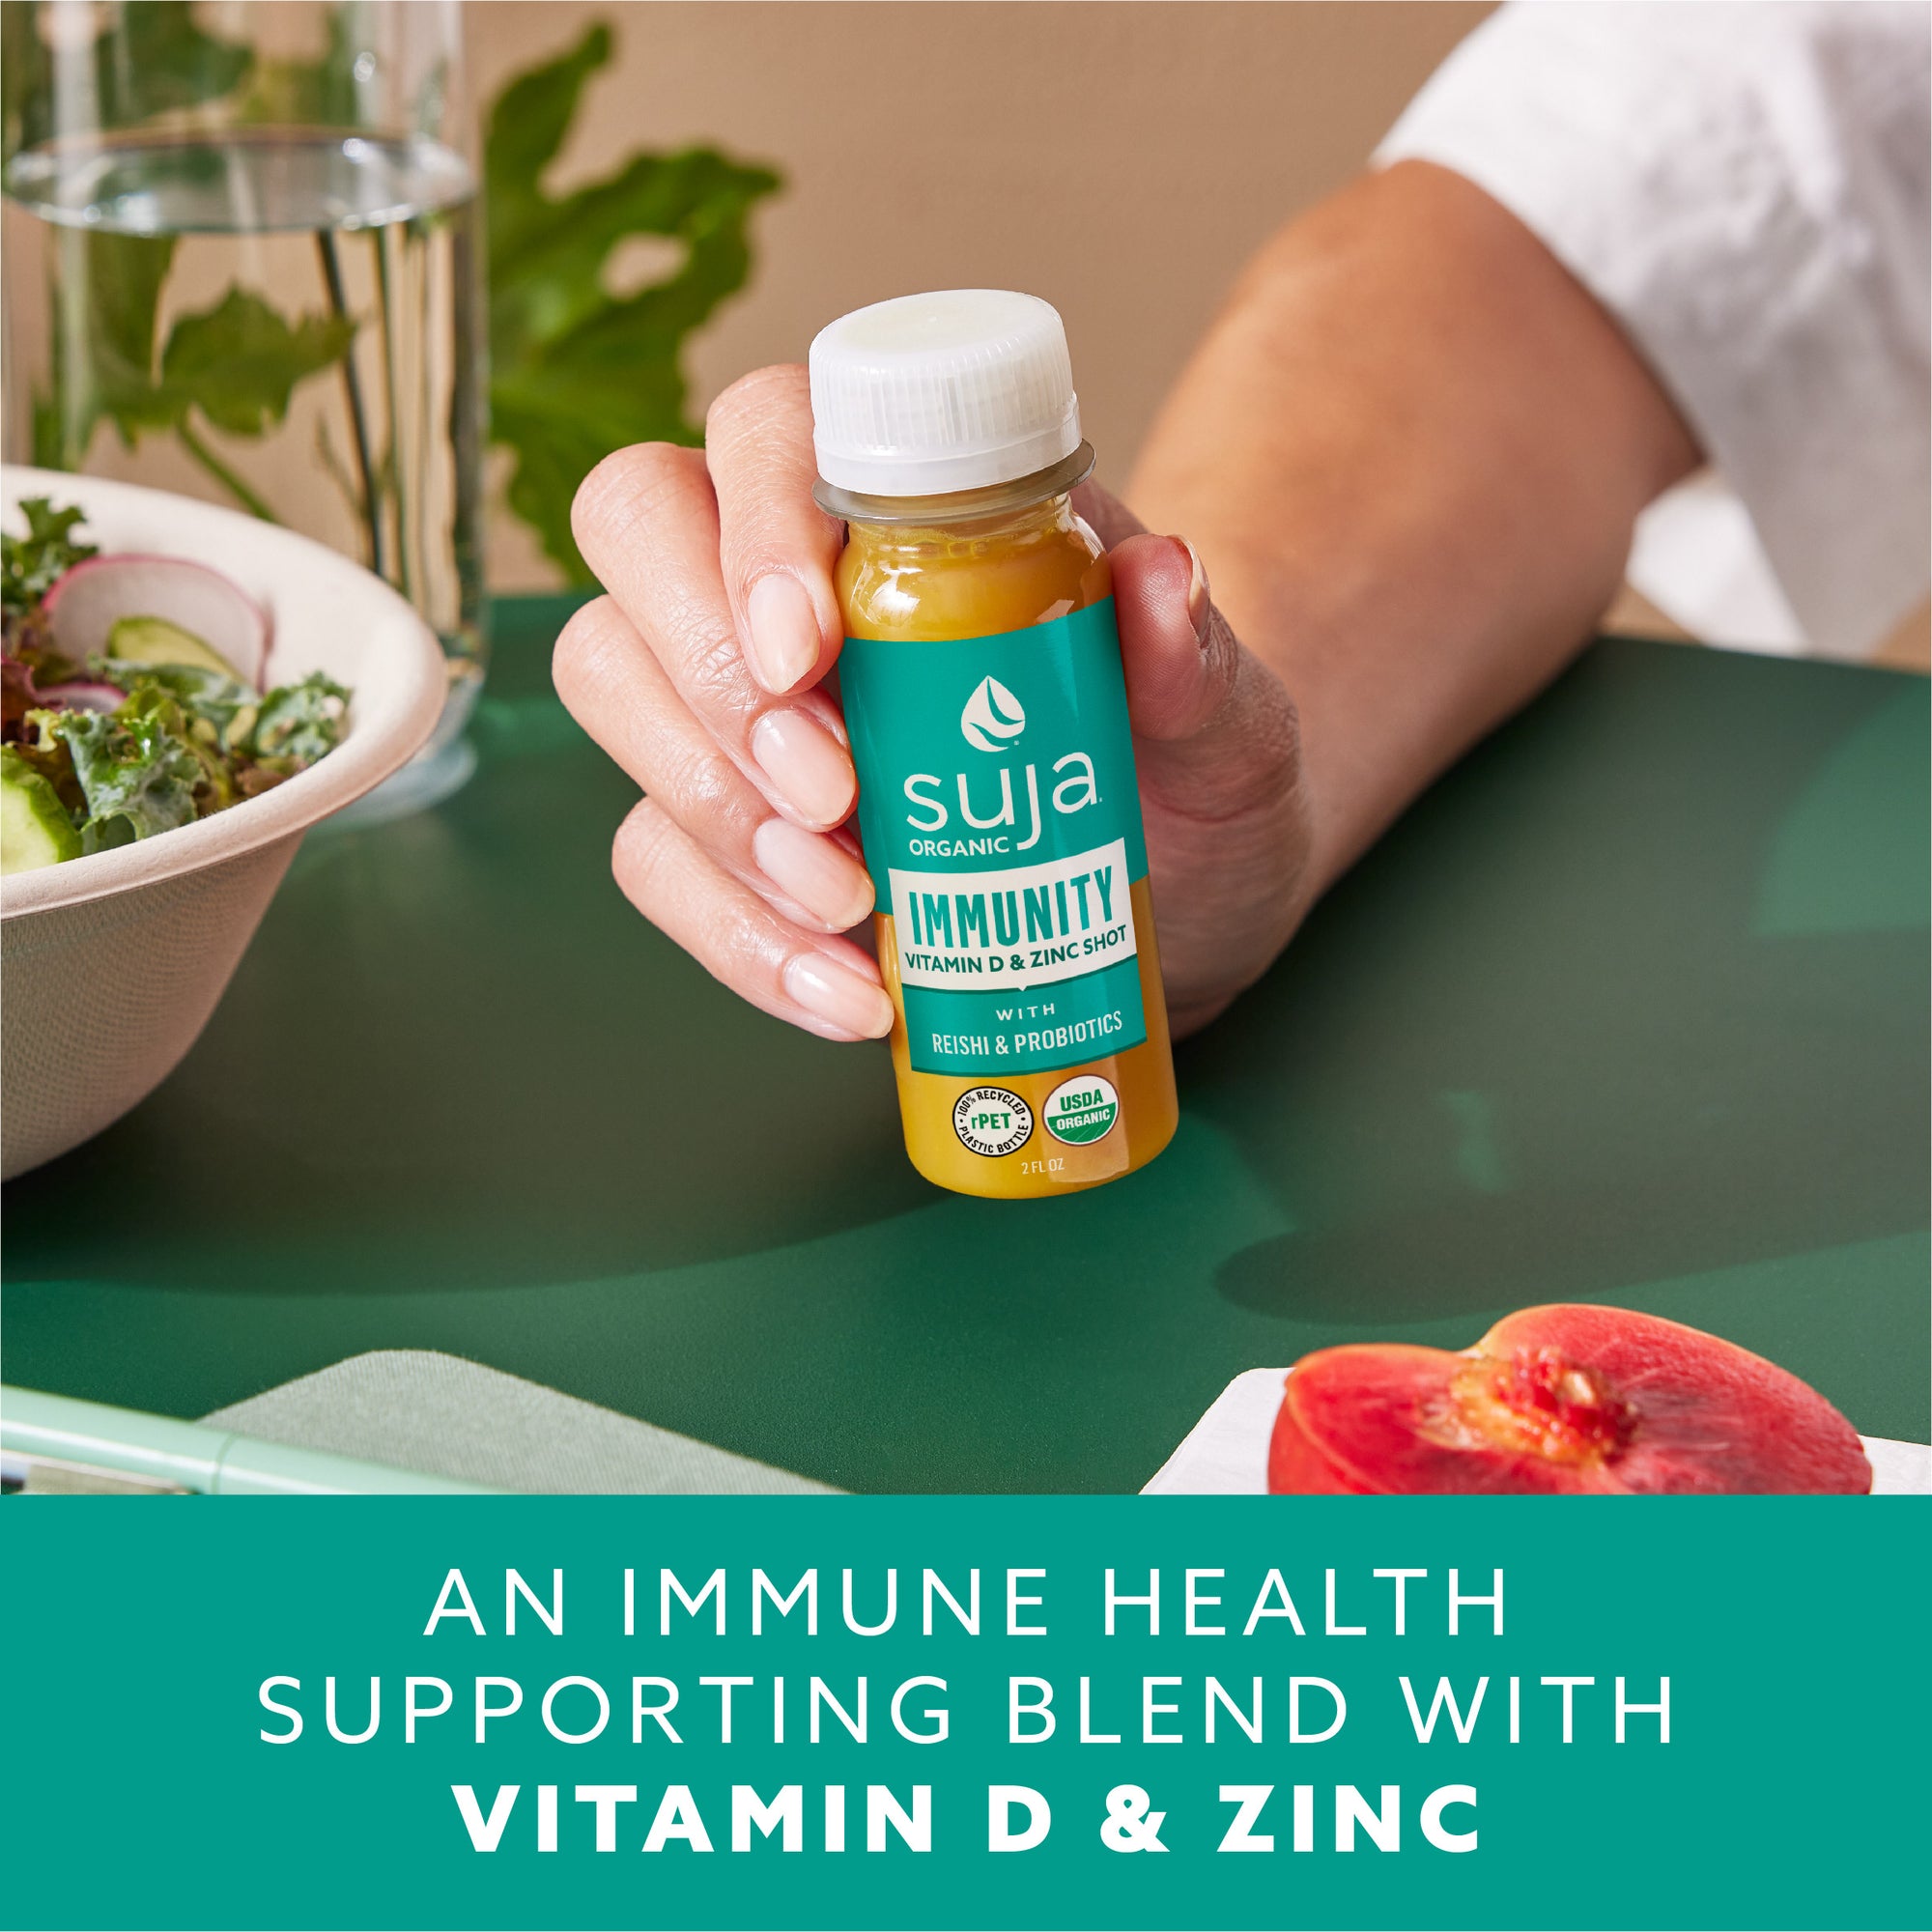 Immunity Vitamin D & Zinc Shot